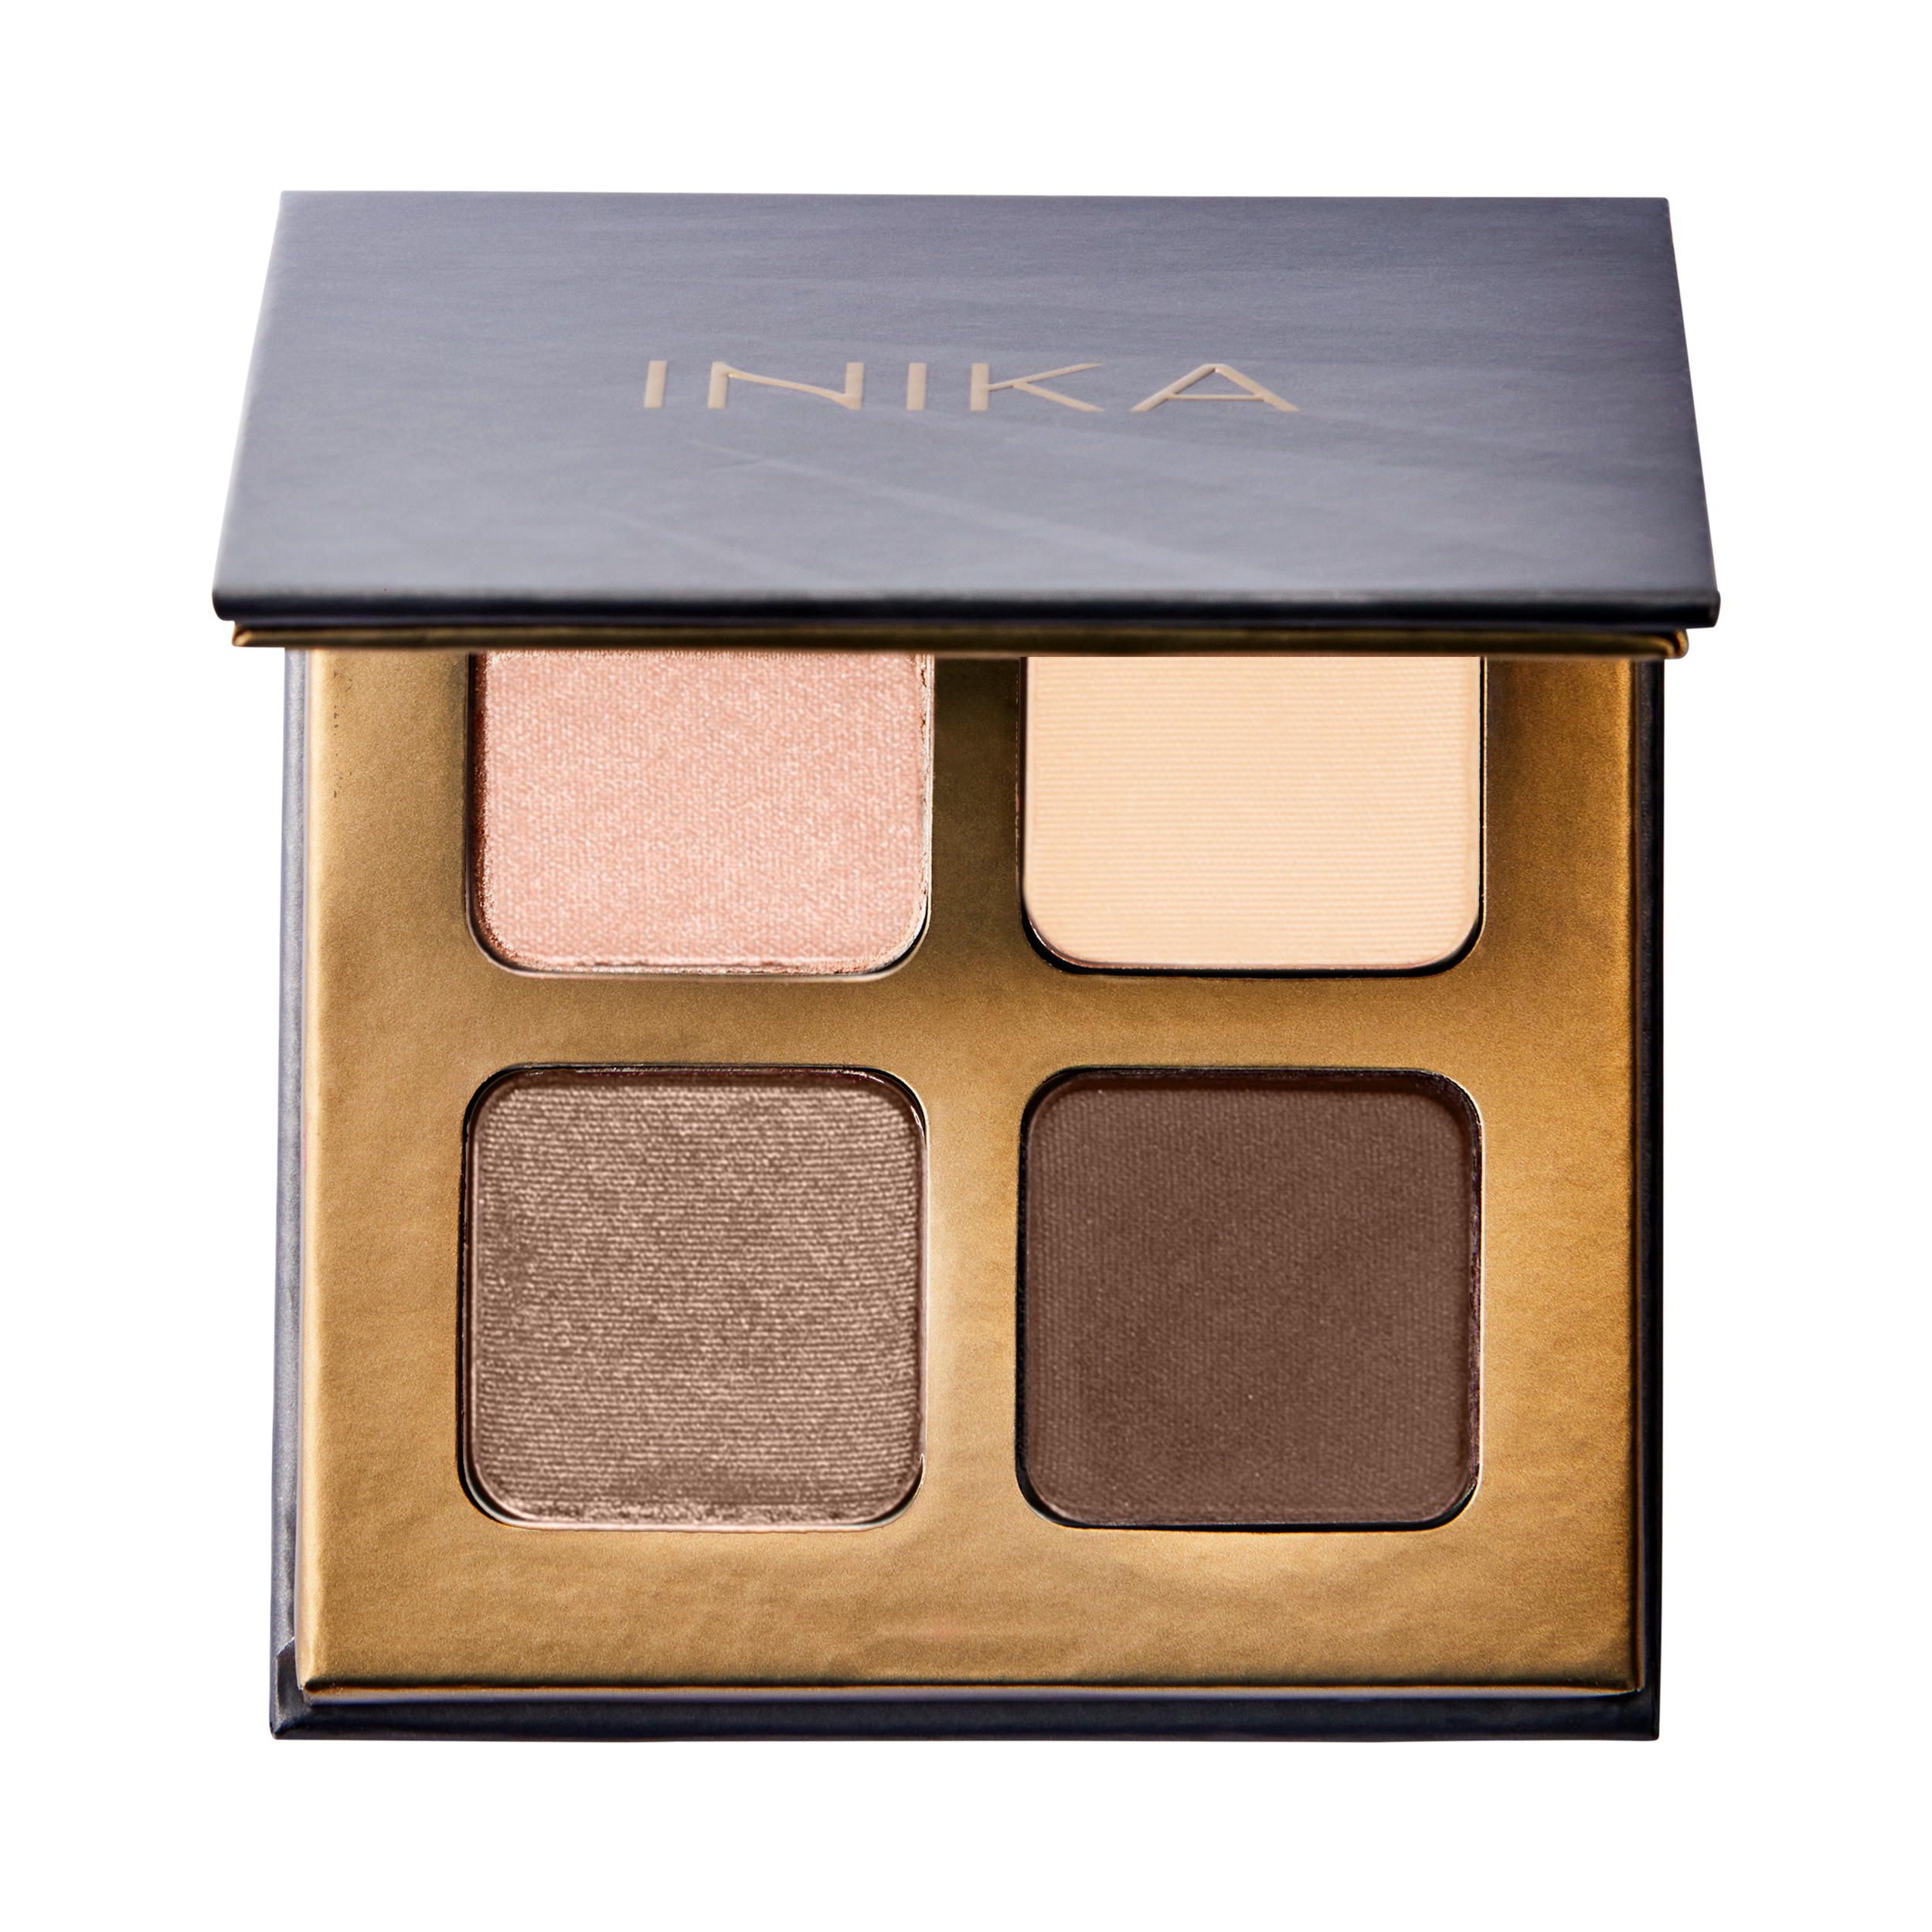 Inika - Quad Eyeshadow Palette (Wind)